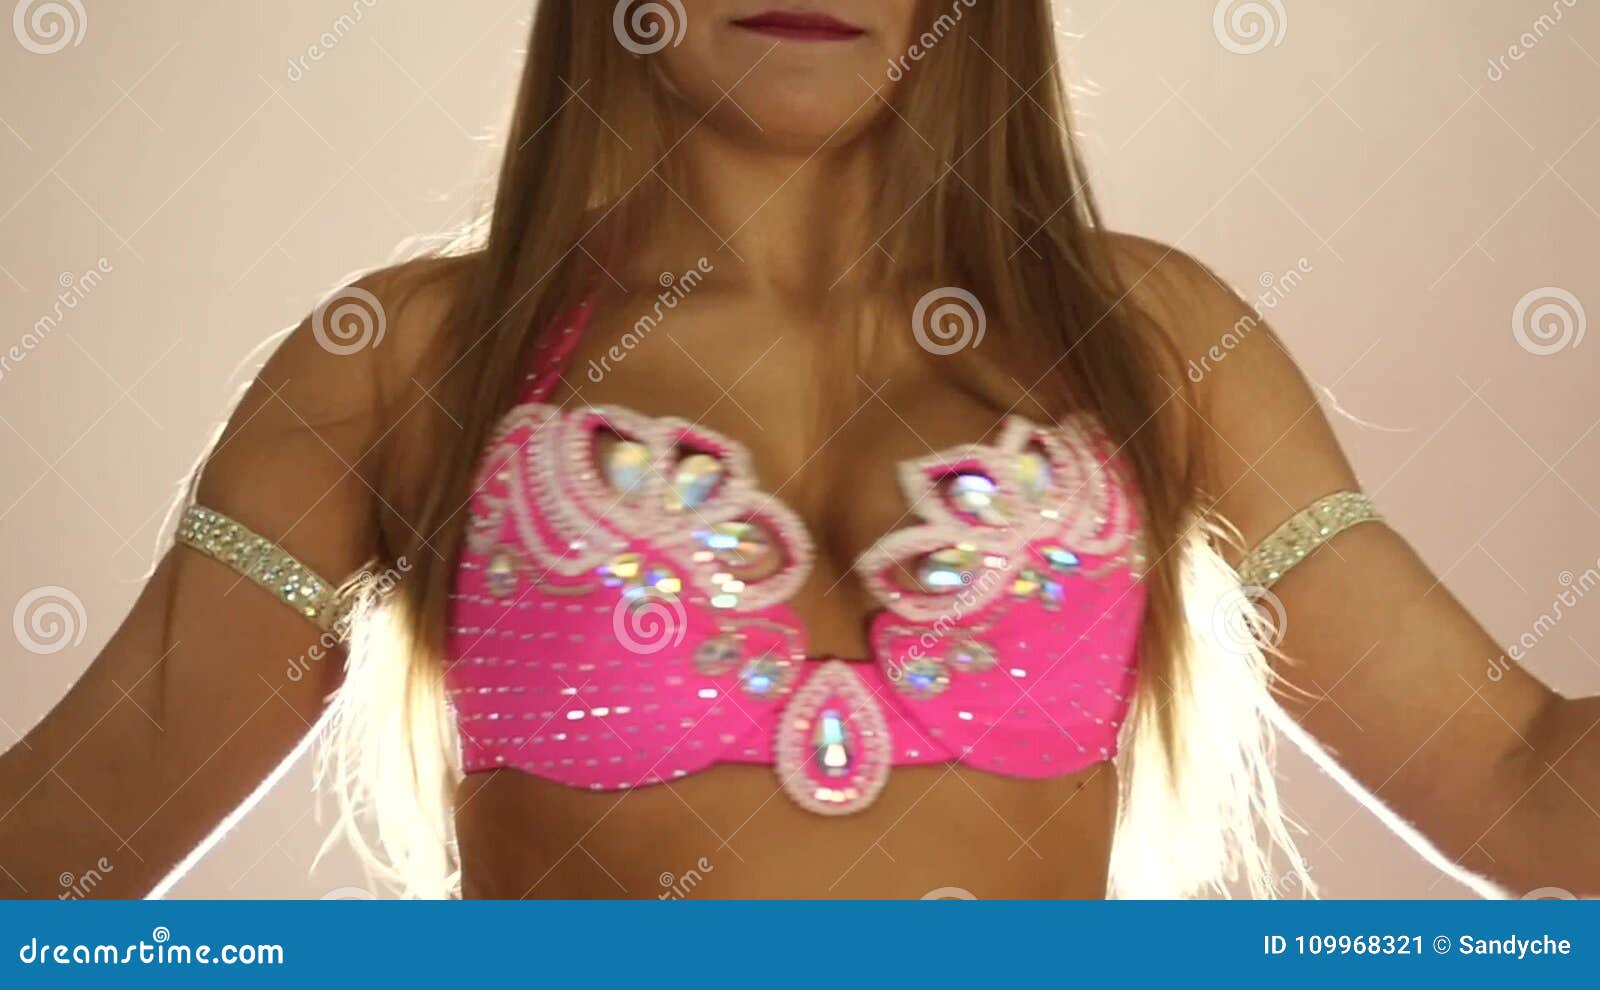 beautiful woman in oriental bra with large breasts shaking body slow  motion. Oriental dance Stock Video